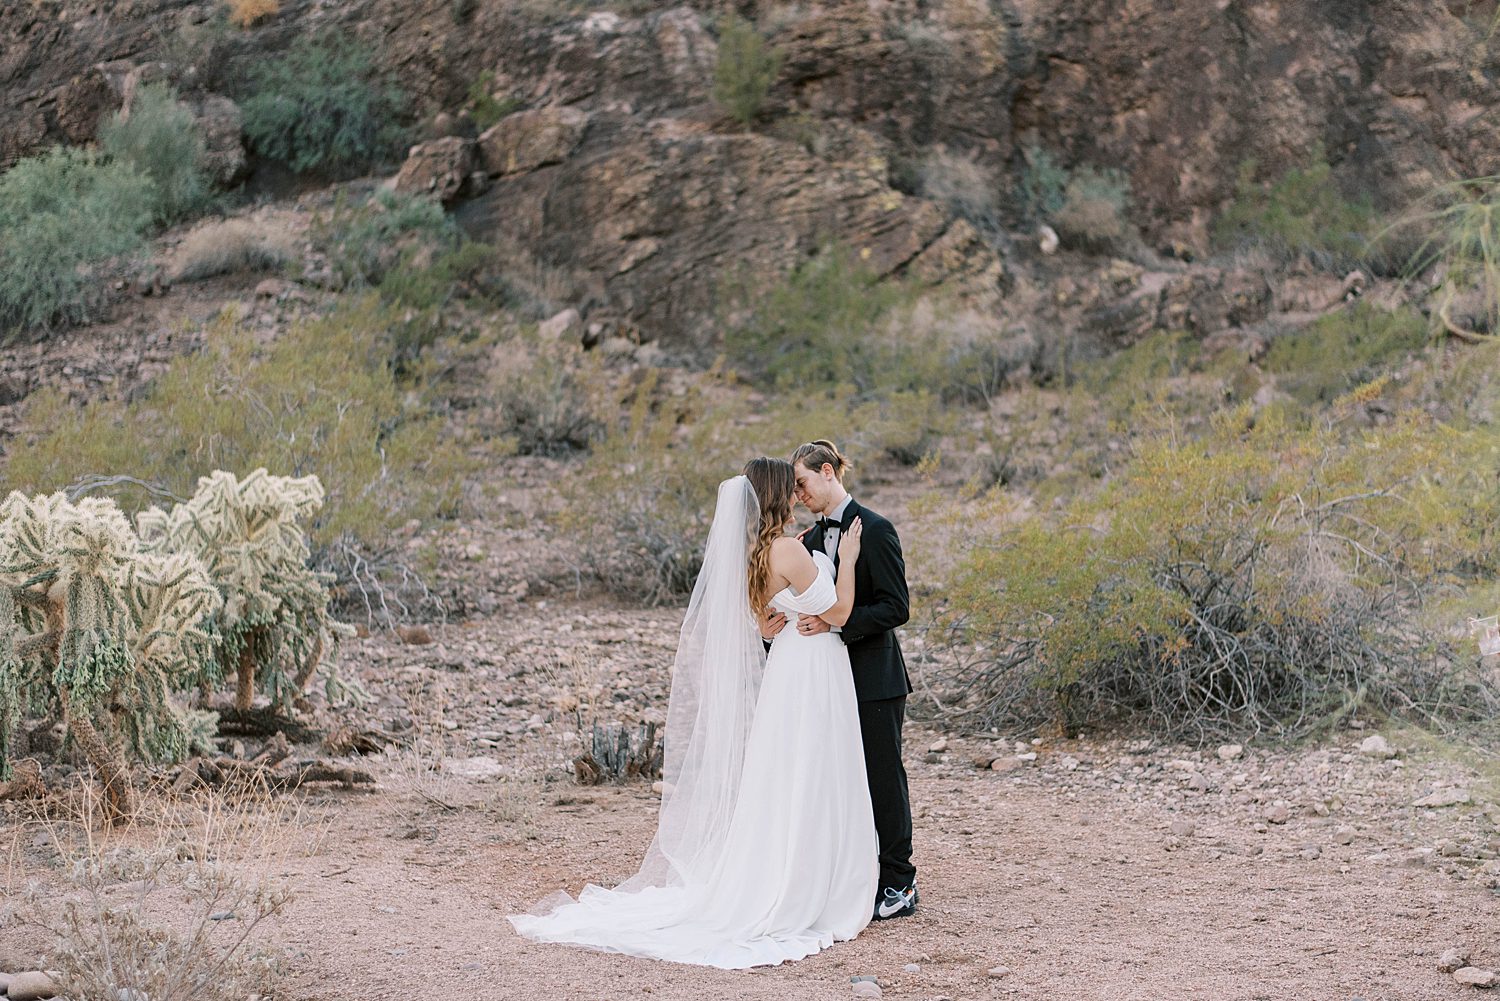 bride and groom kiss by rocks in Arizona desert